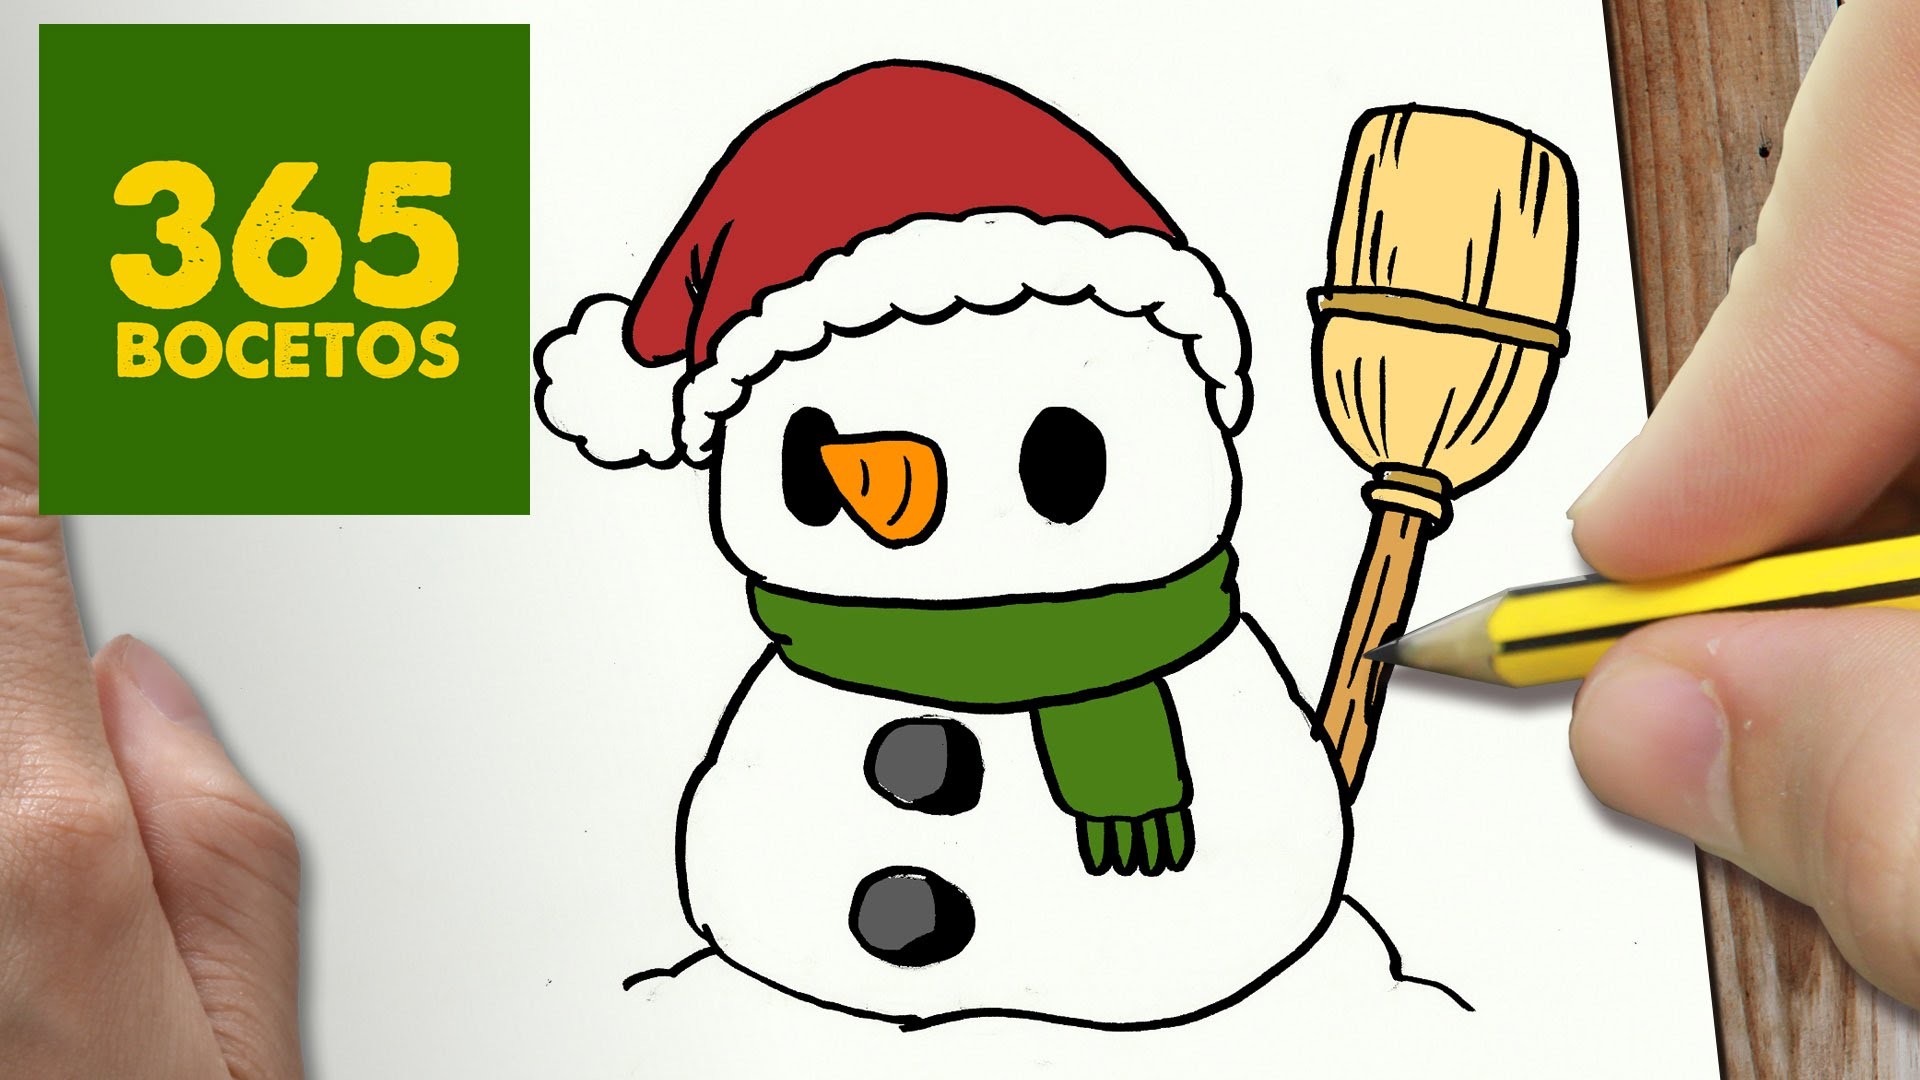 COMO DIBUJAR UN MUÑECO DE NIEVE PARA NAVIDAD PASO A PASO: Dibujos kawaii navideños -  draw a SNOWMAN